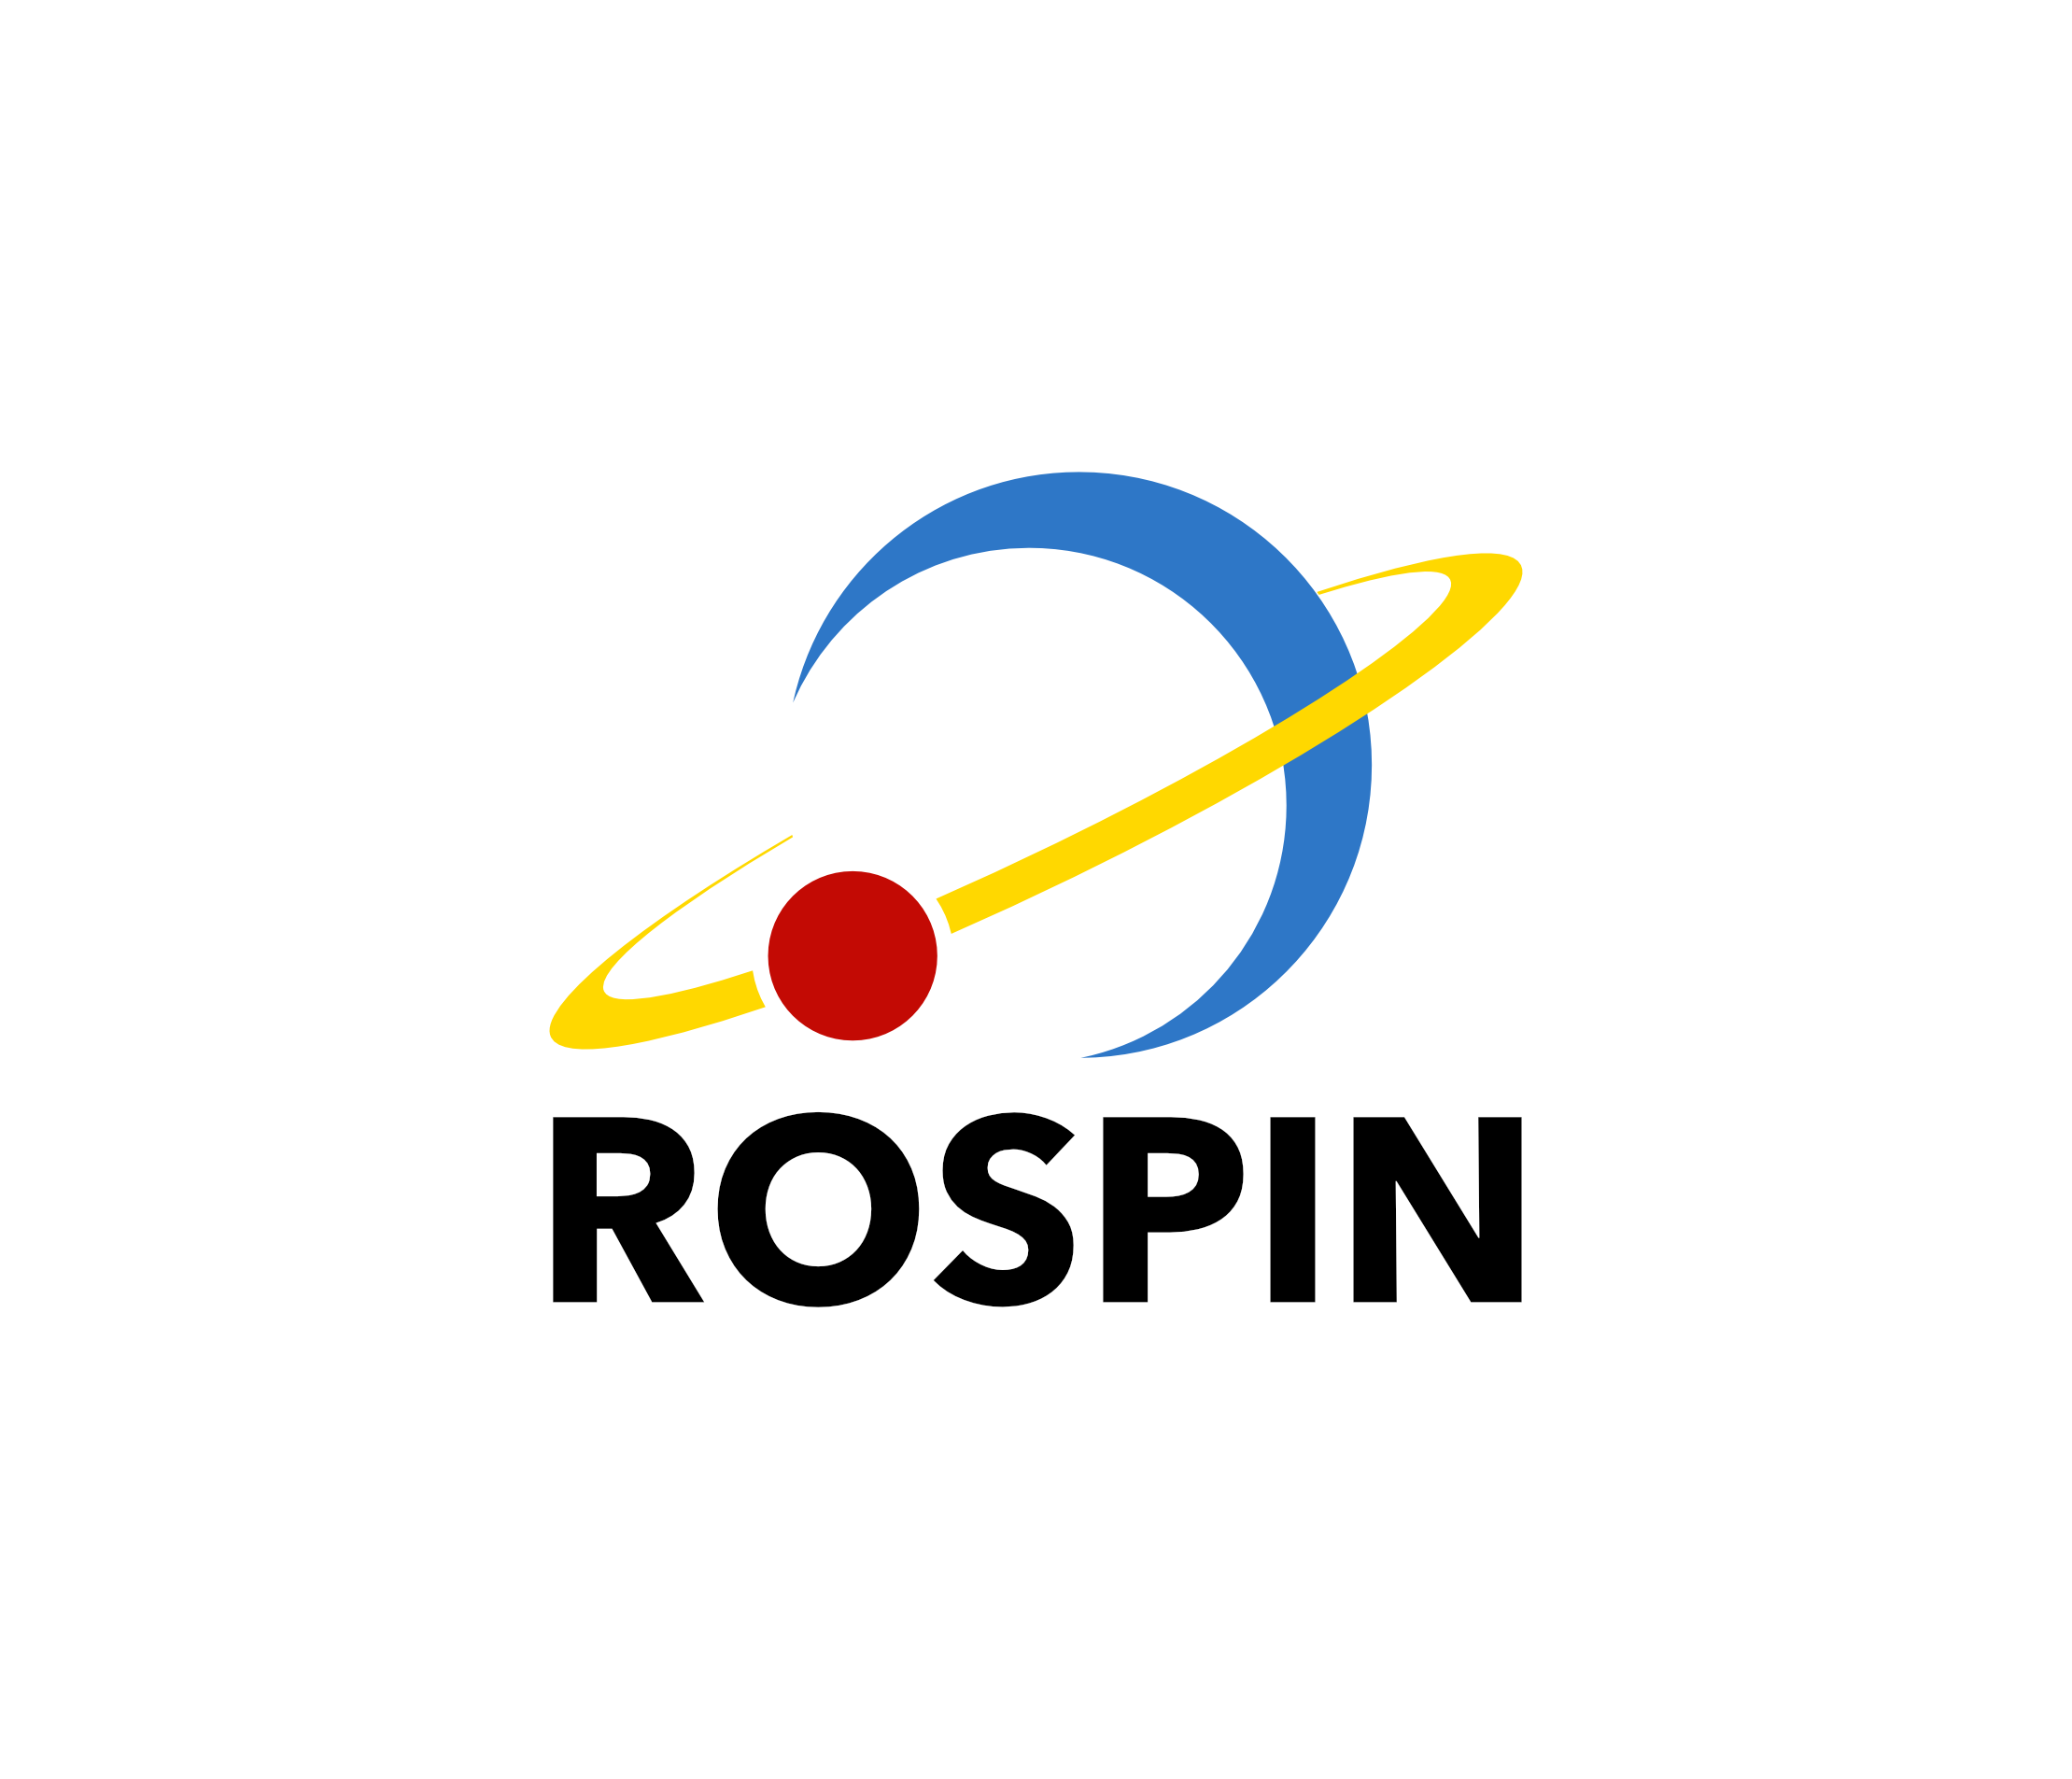 Romanian Space Initiative (ROSPIN) logo